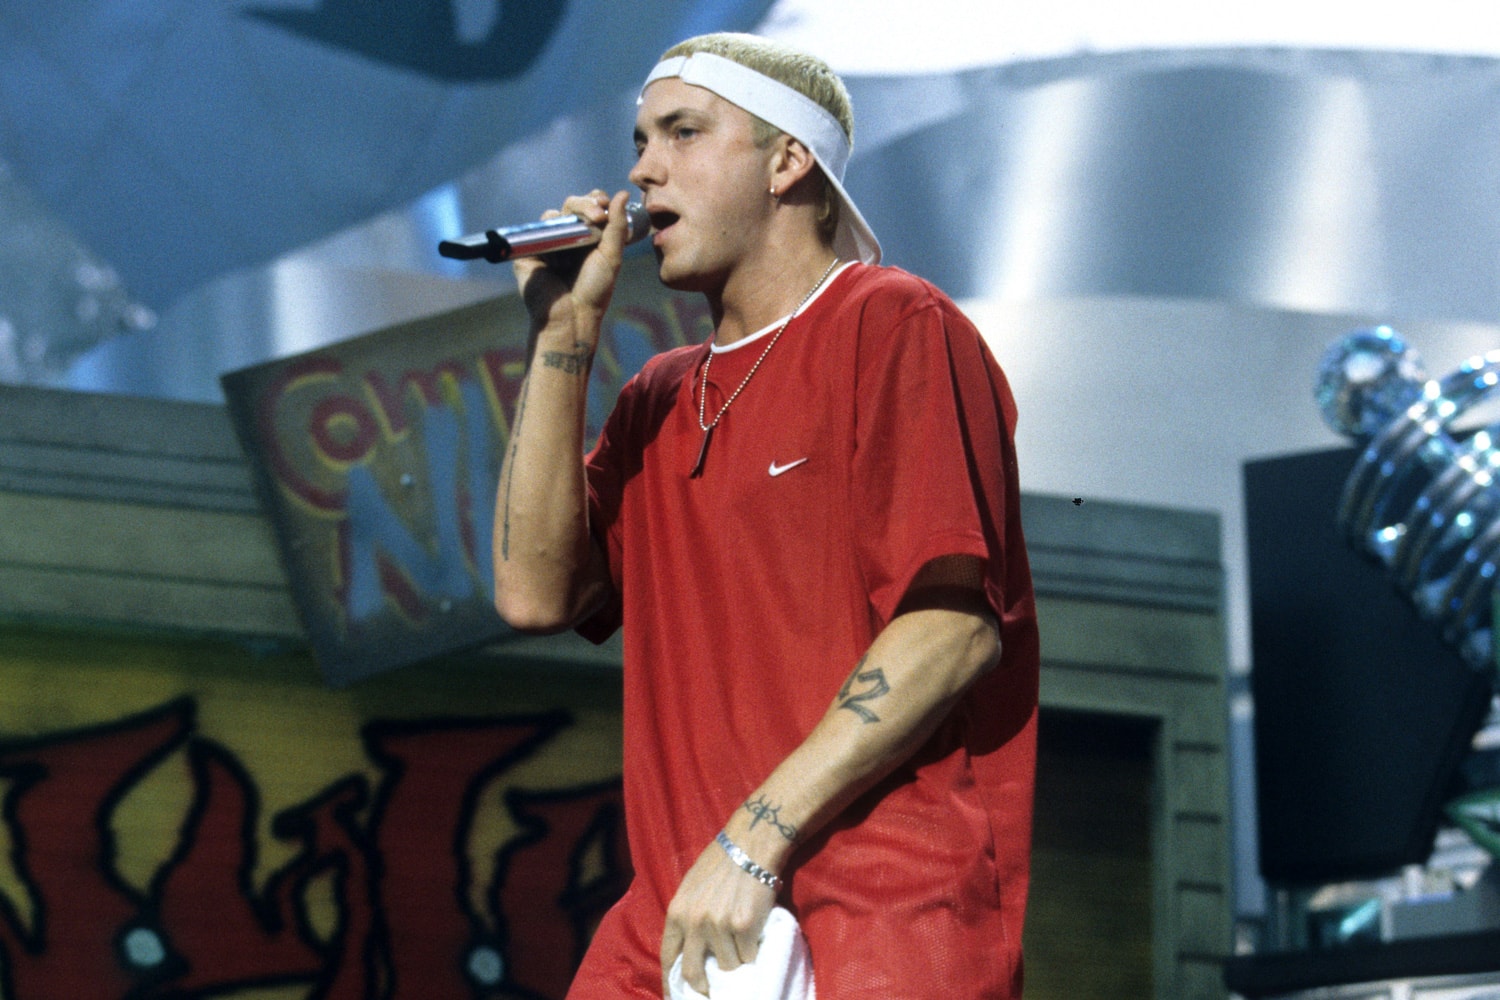 Eminem 'The Slim Shady LP (Expanded Edition)' Release Info 20th anniversary detroit rap hip-hop new tracks freestyles vinyl cd special 30 songs bonus album stream spotify apple music marshall matthers 